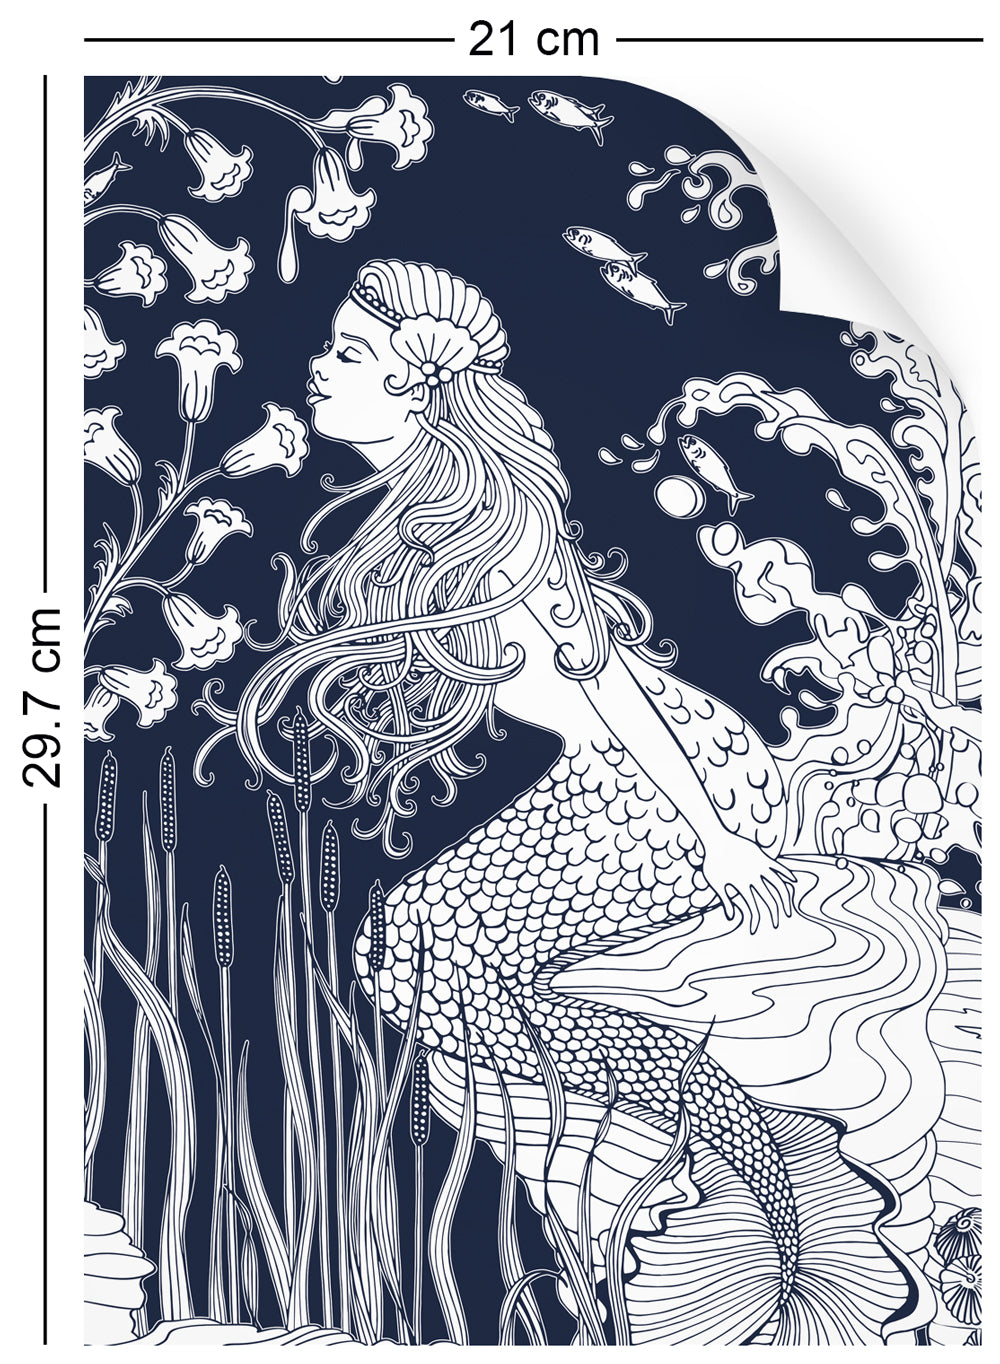 a4 wallpaper swatch with underwater mermaid design in navy blue